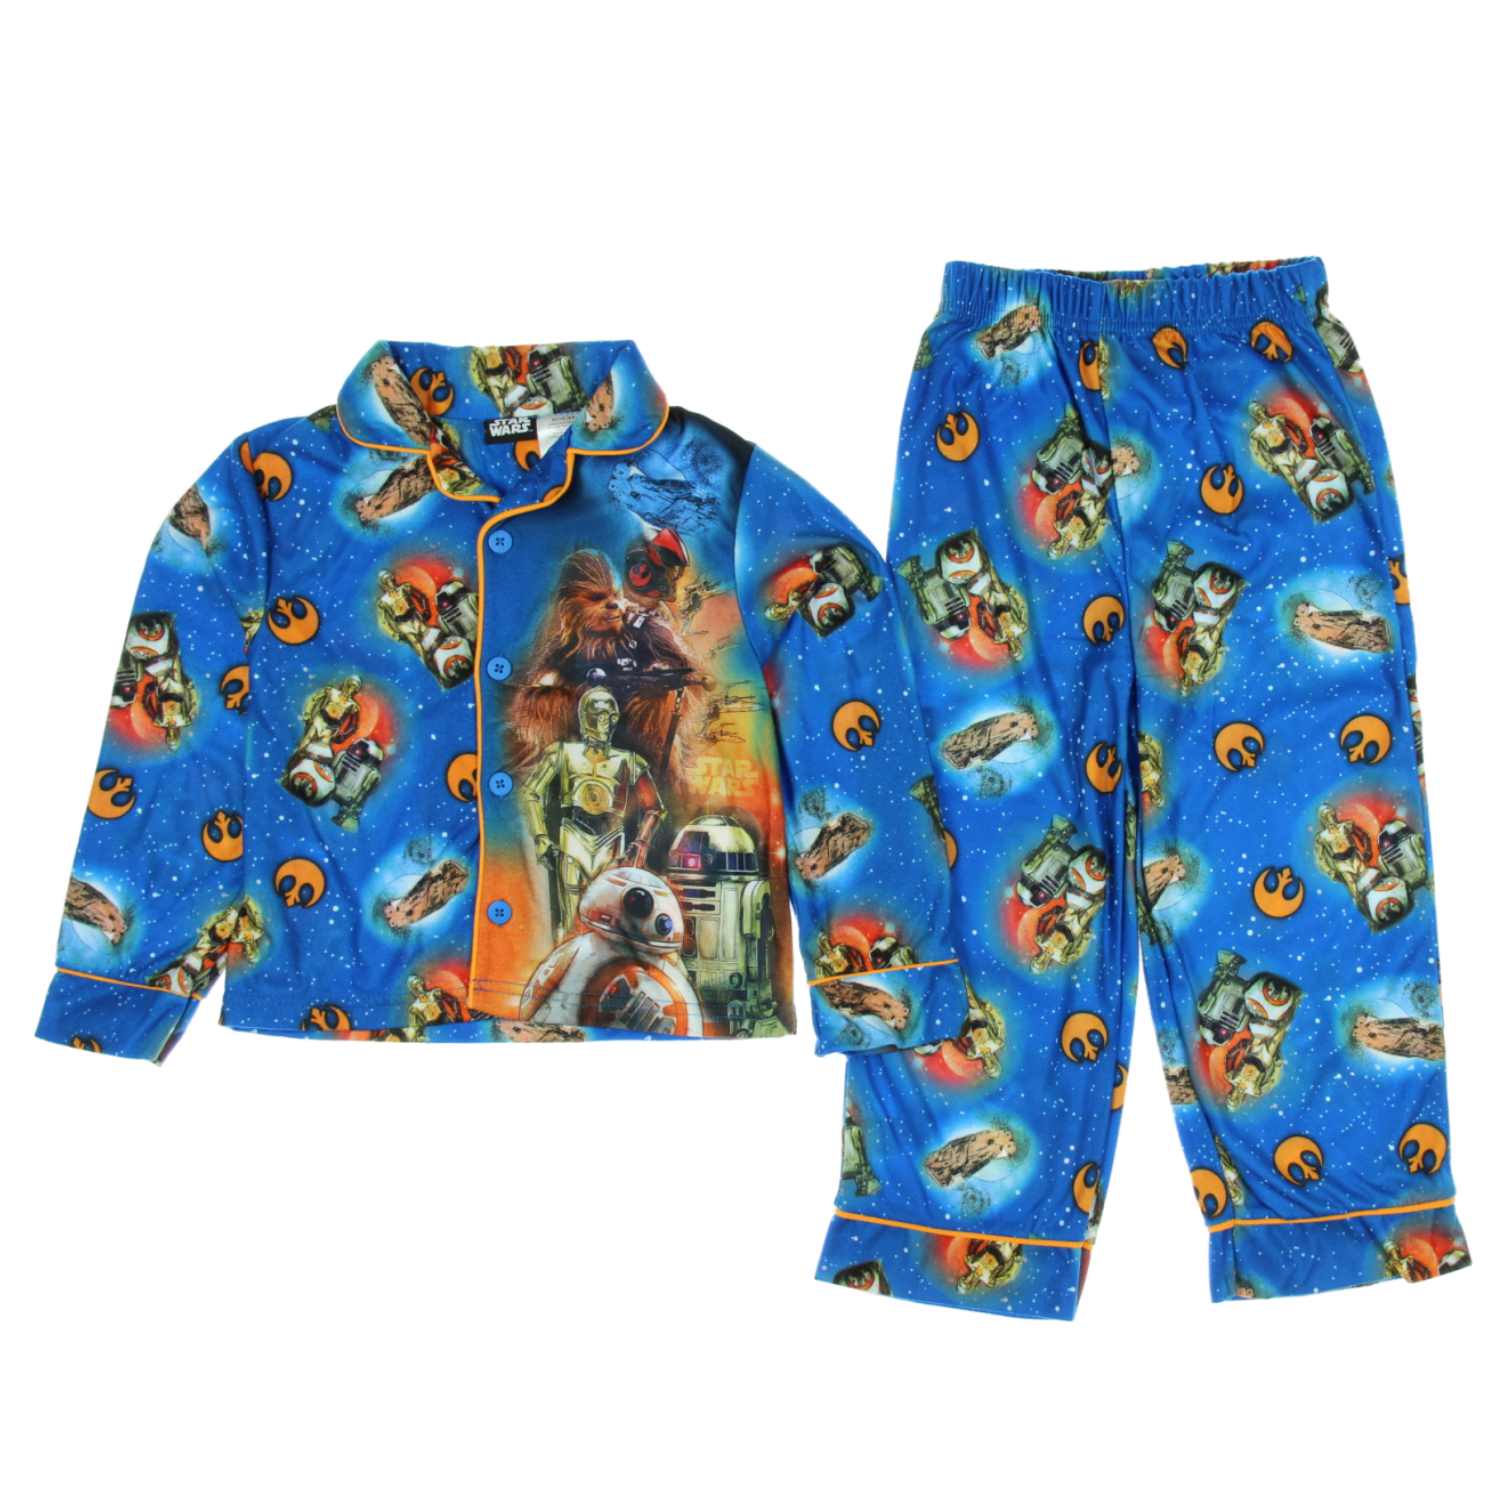 Star Wars Boys Blue Flannel Pajamas The Force Awakens Sleepwear Set 4-5